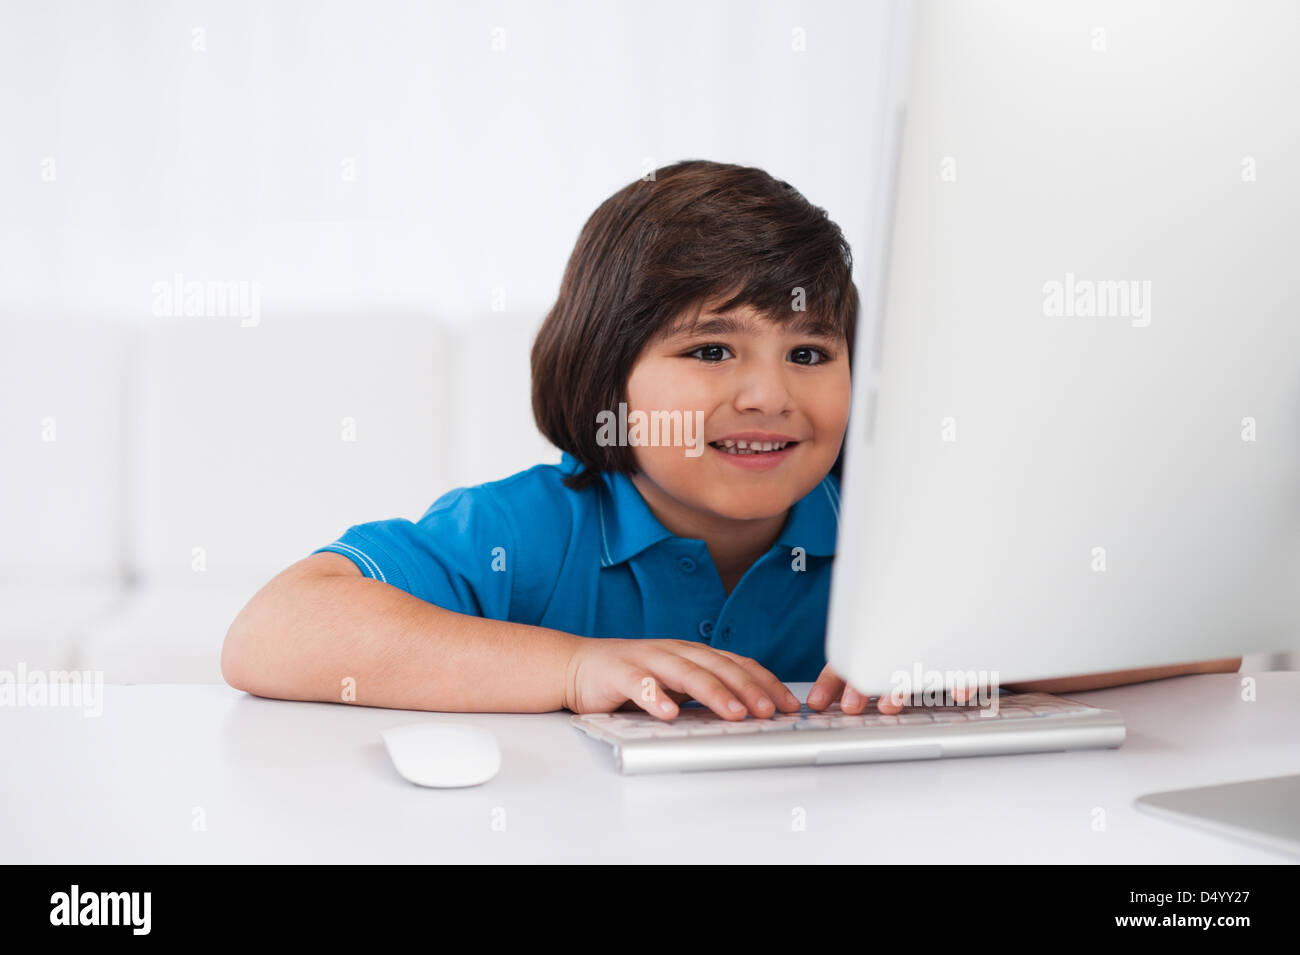 Boy using a desktop computer Stock Photo